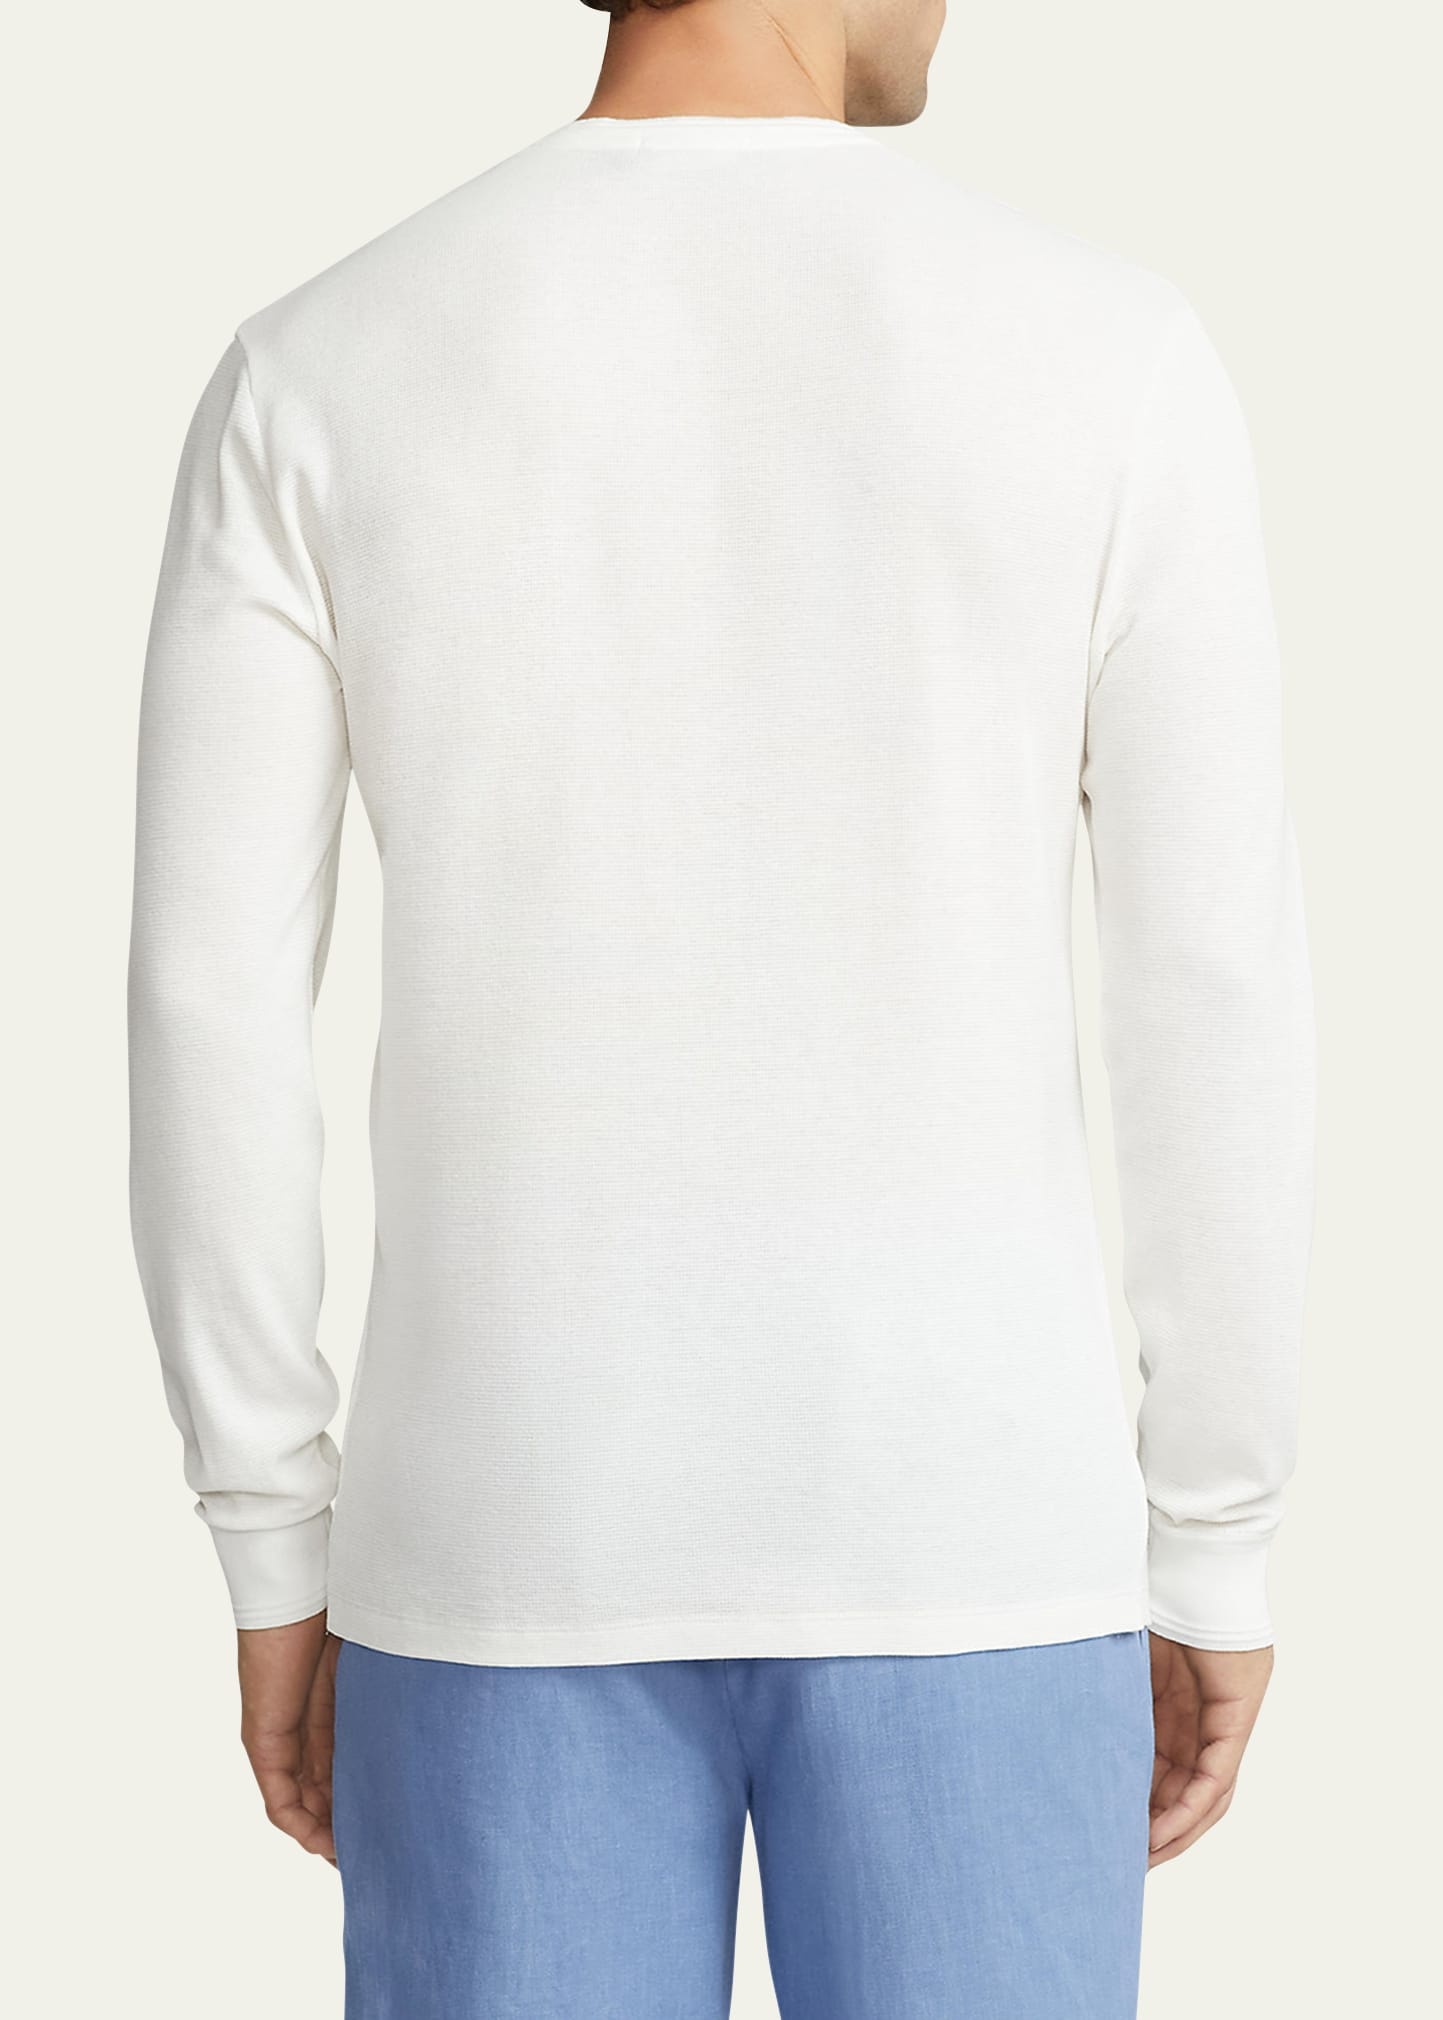 Men's Cotton and Mulberry Silk Henley Shirt - 3